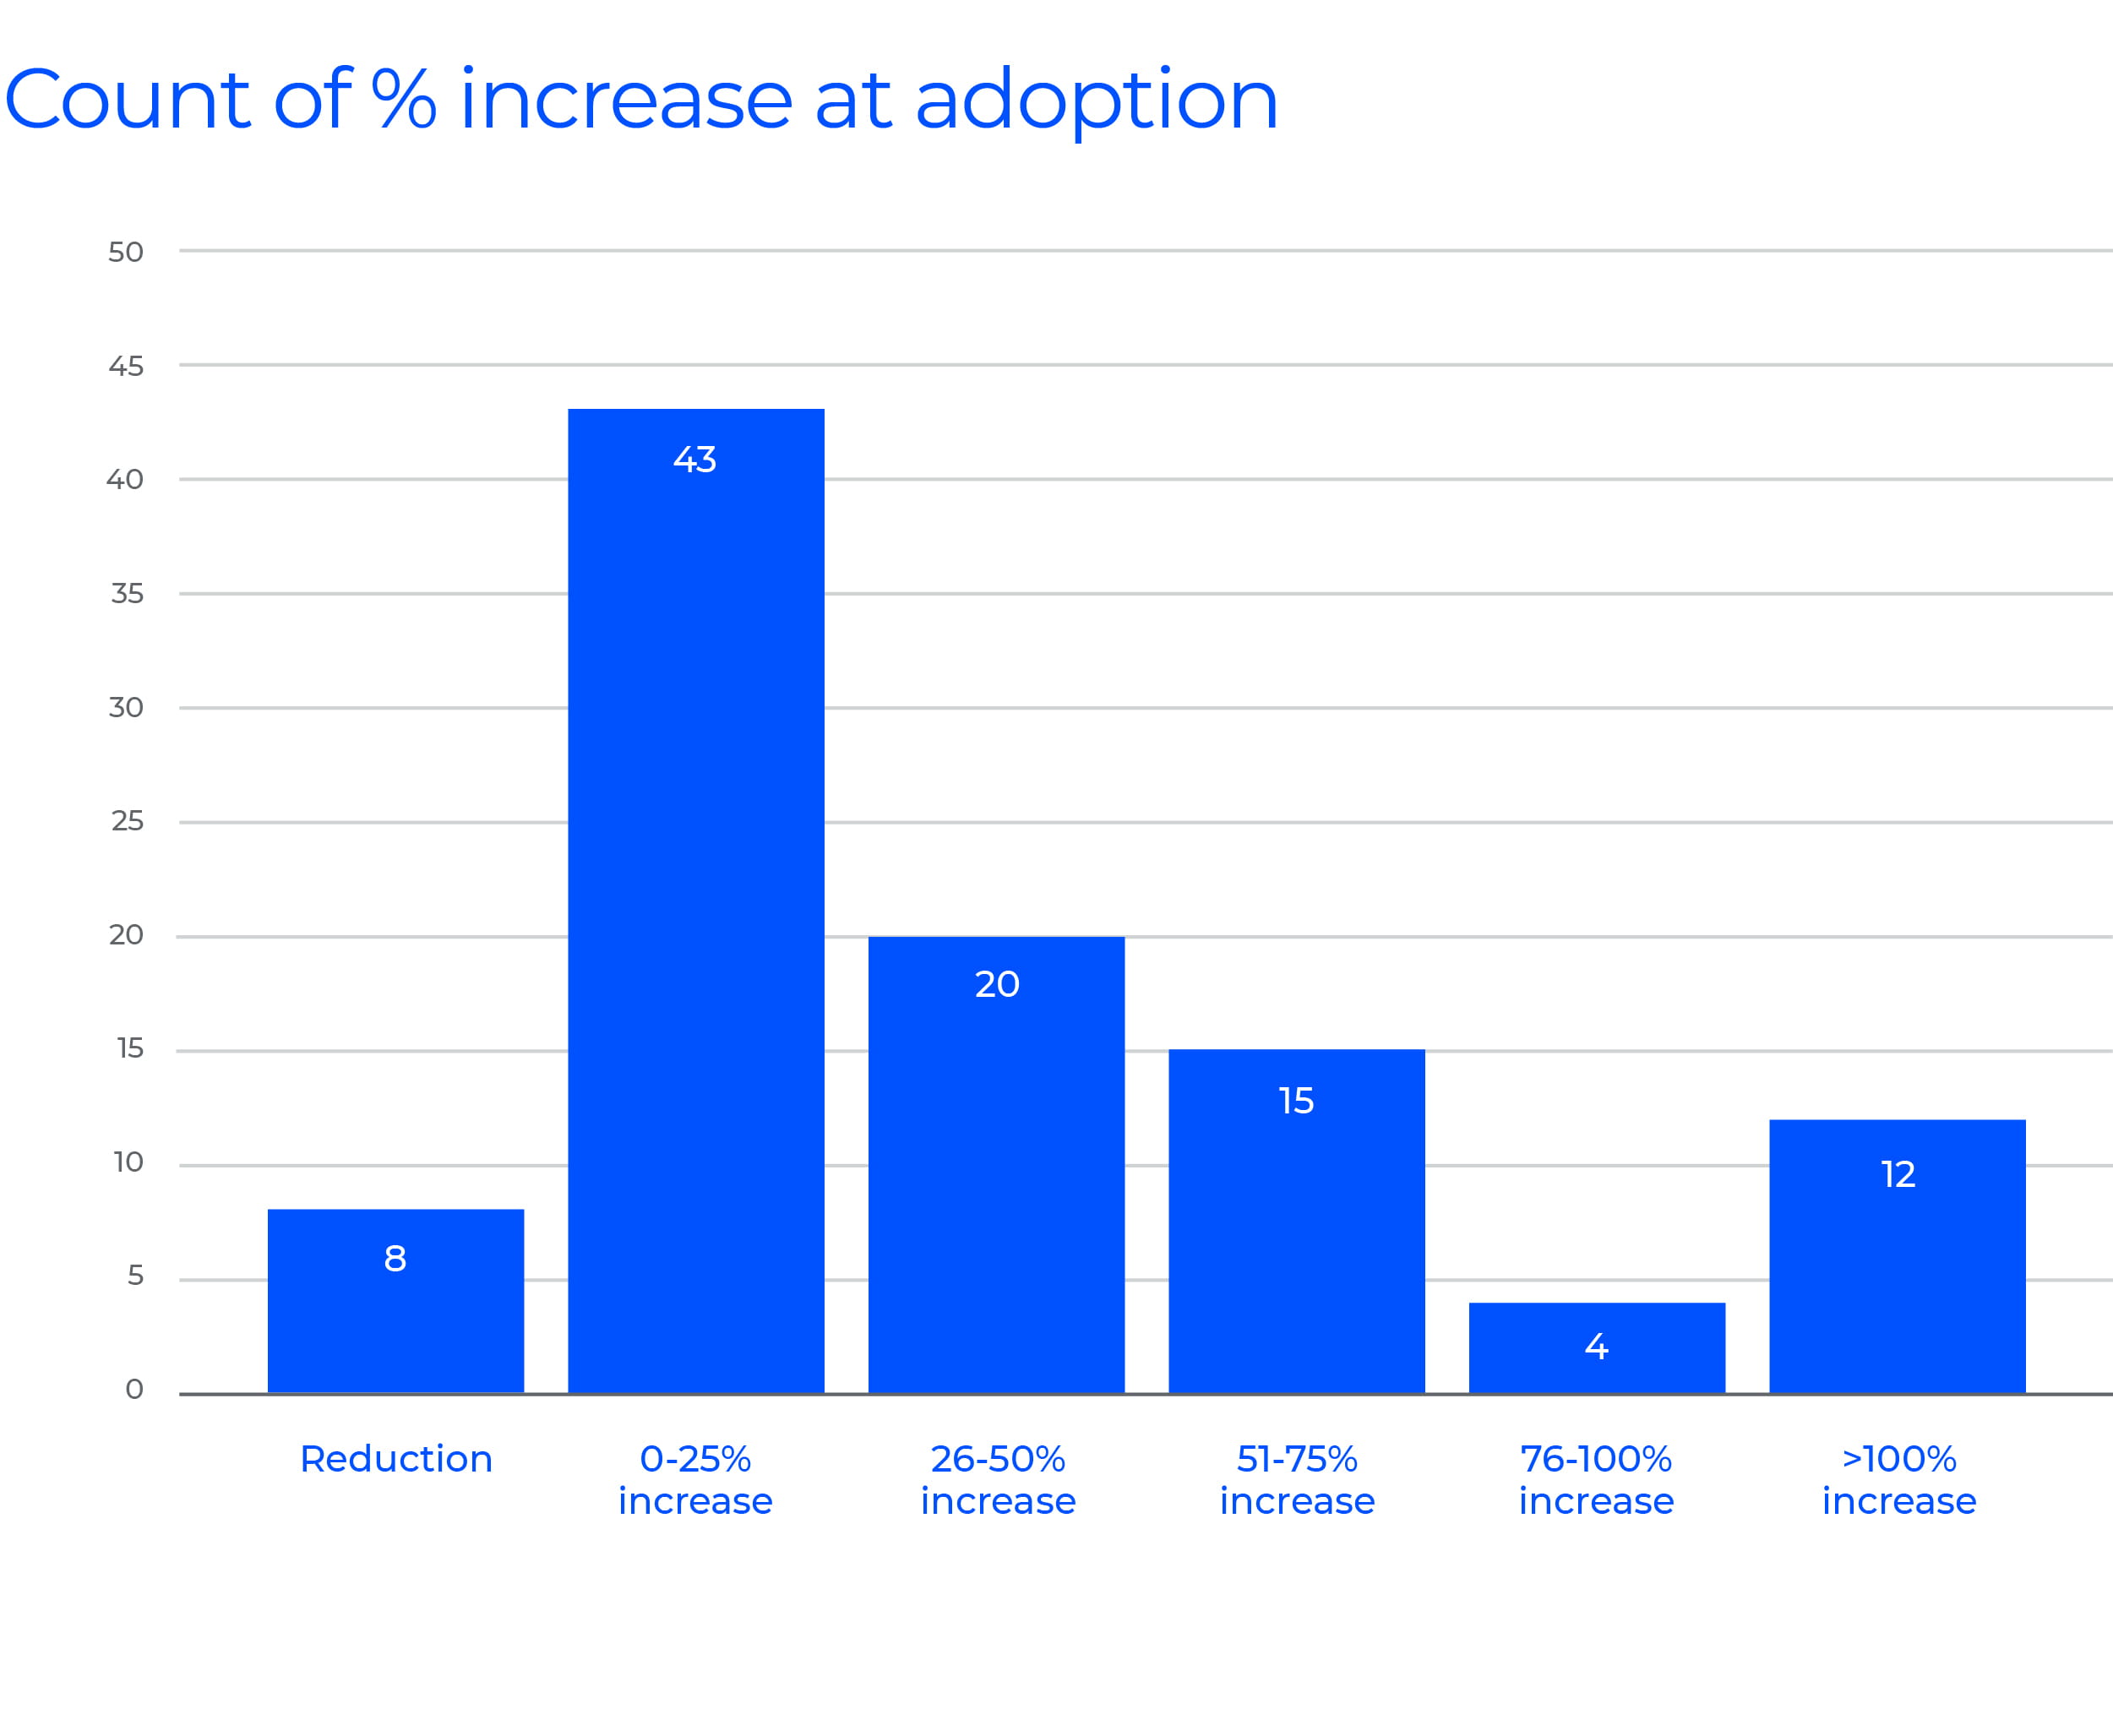 Count of % increase at adoption graph